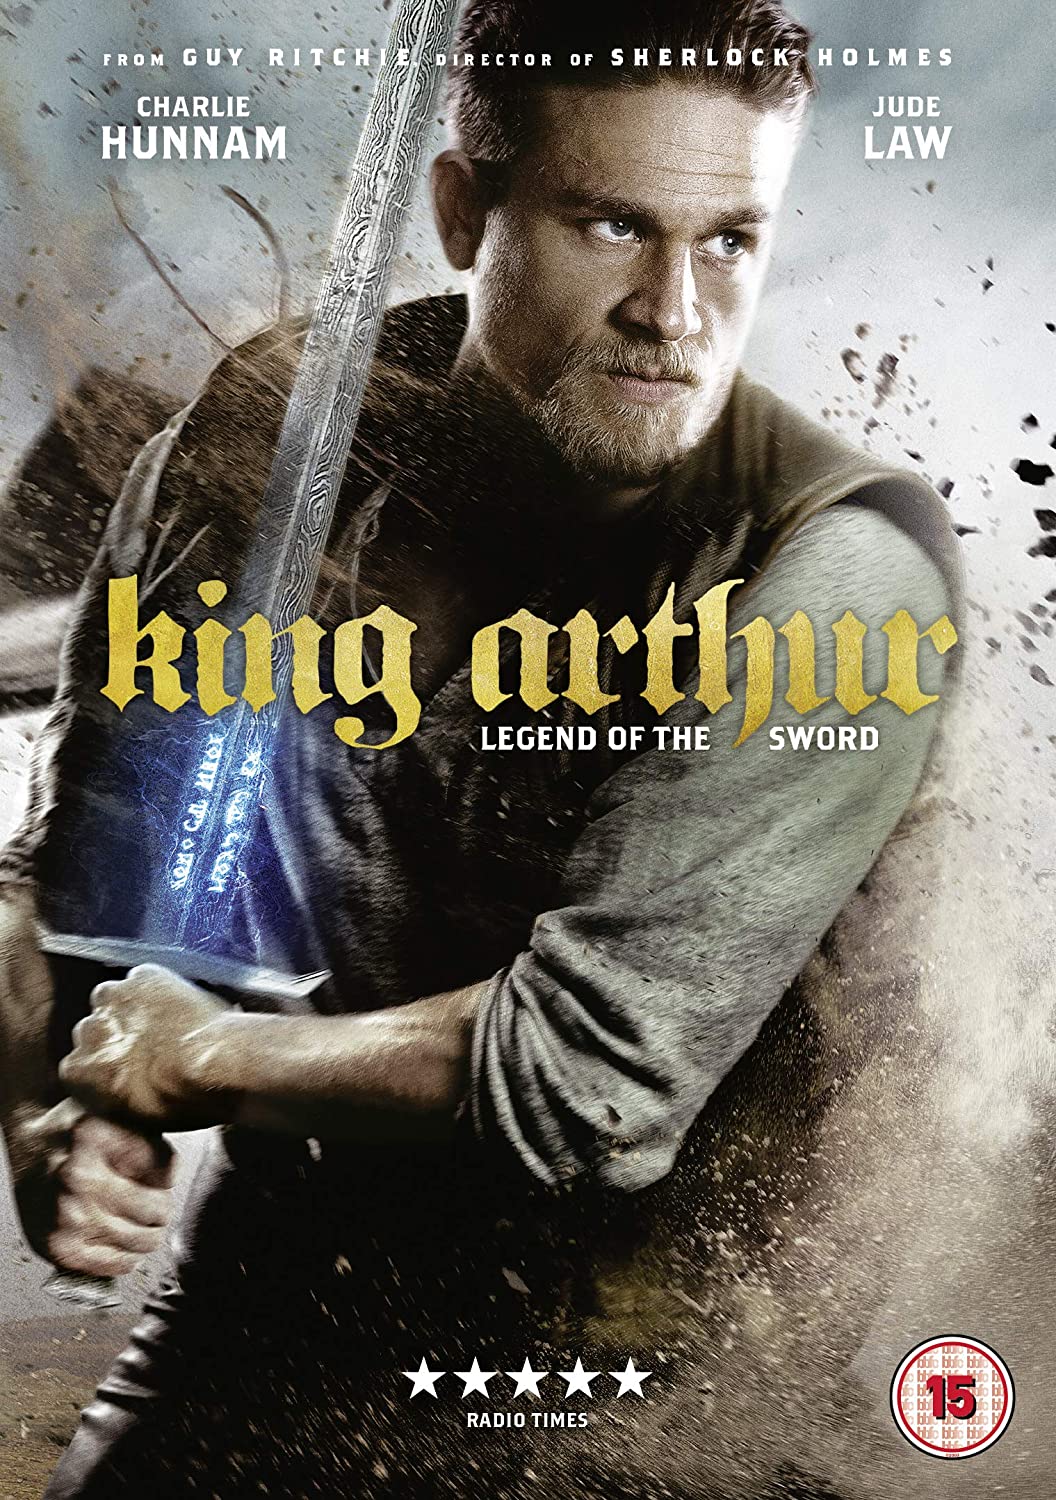 King Arthur: Legend of the Sword – Fantasy/Drama [BLu-ray]